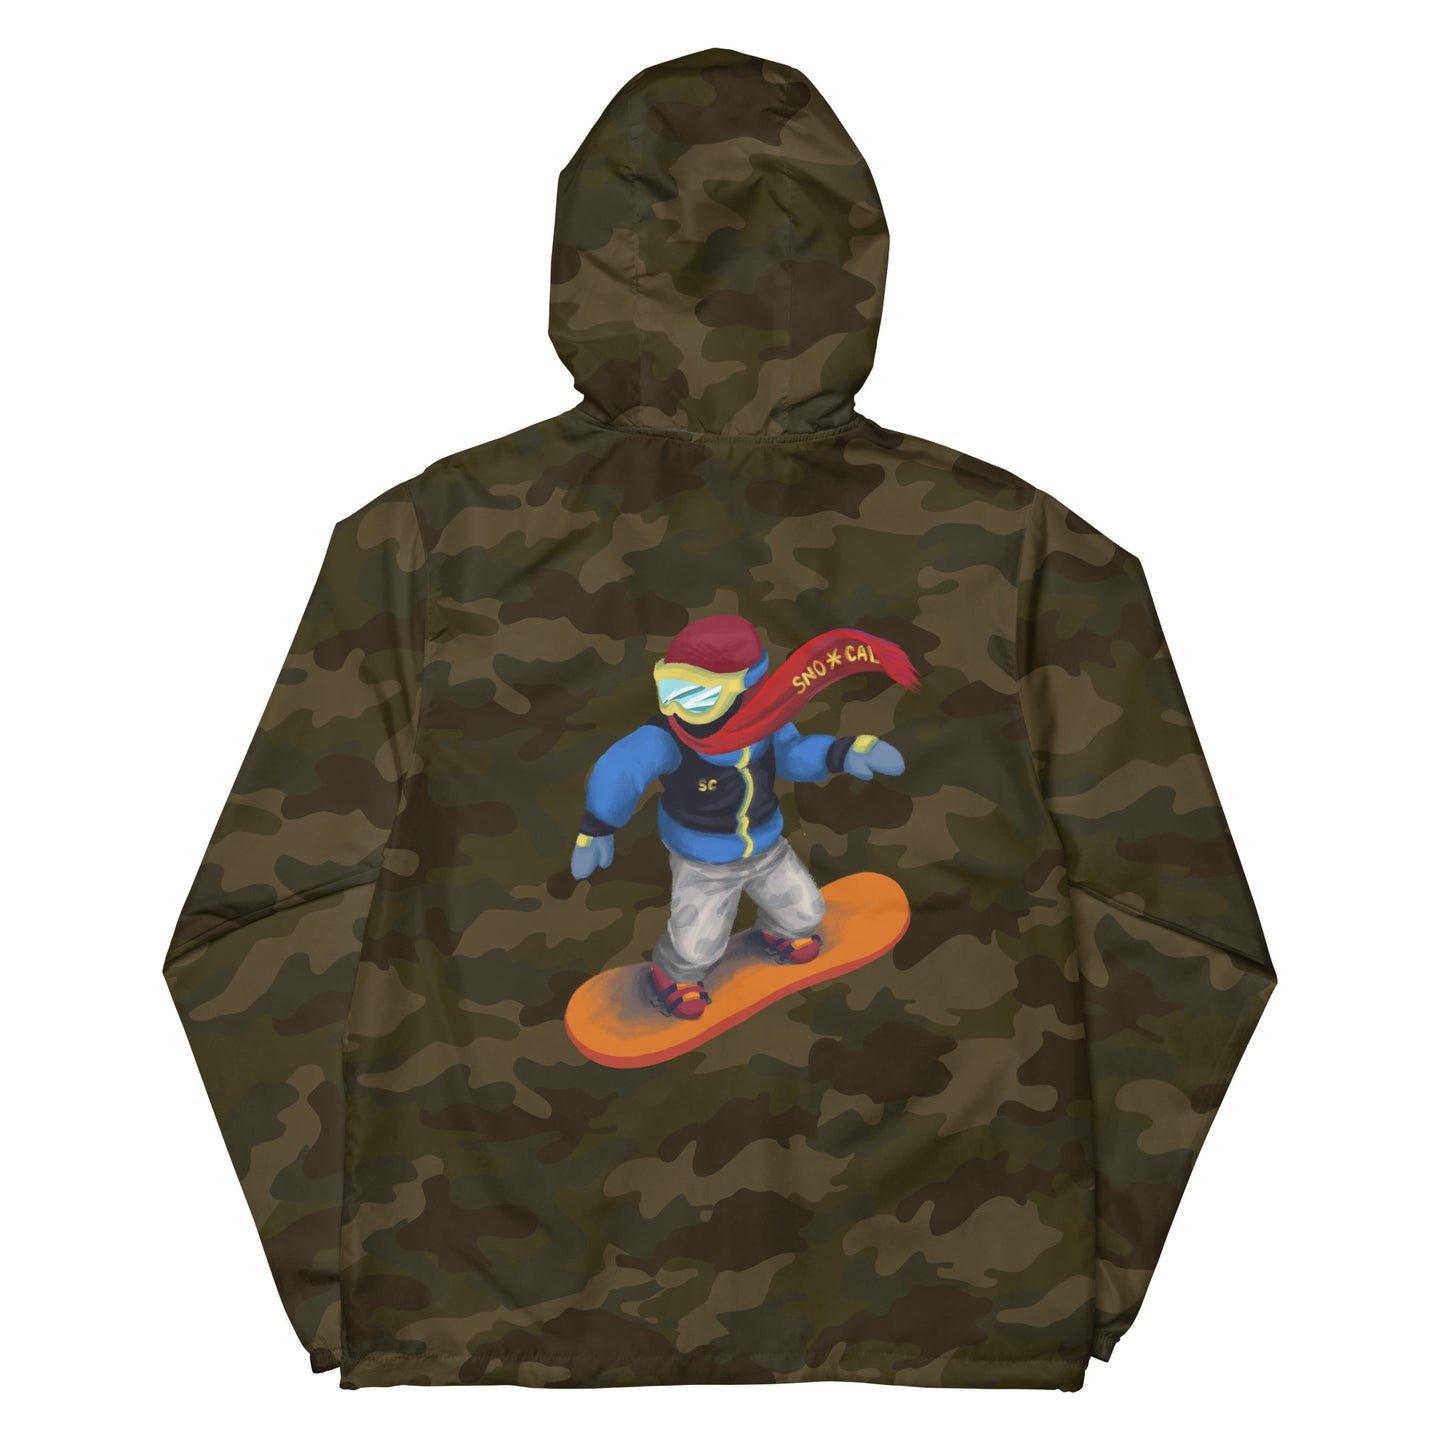 camouflage snowboard emoji hoodie with zipper